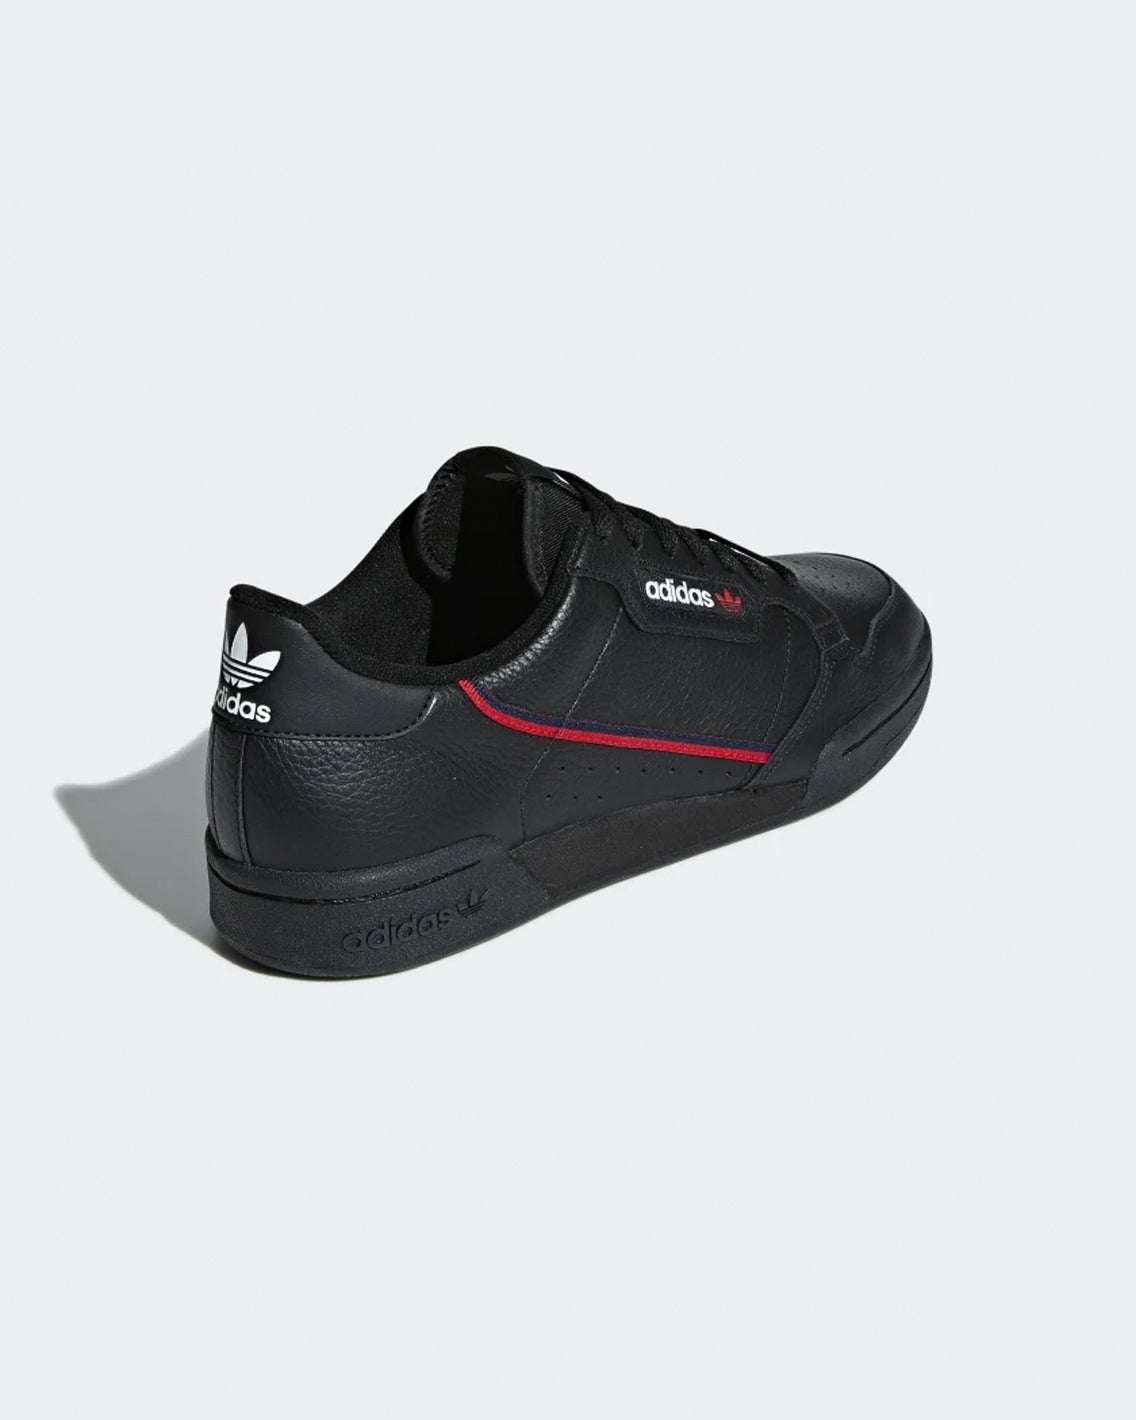 Adidas Originals - Continental 80 - Core Black/Scarlet/Collegiate Navy